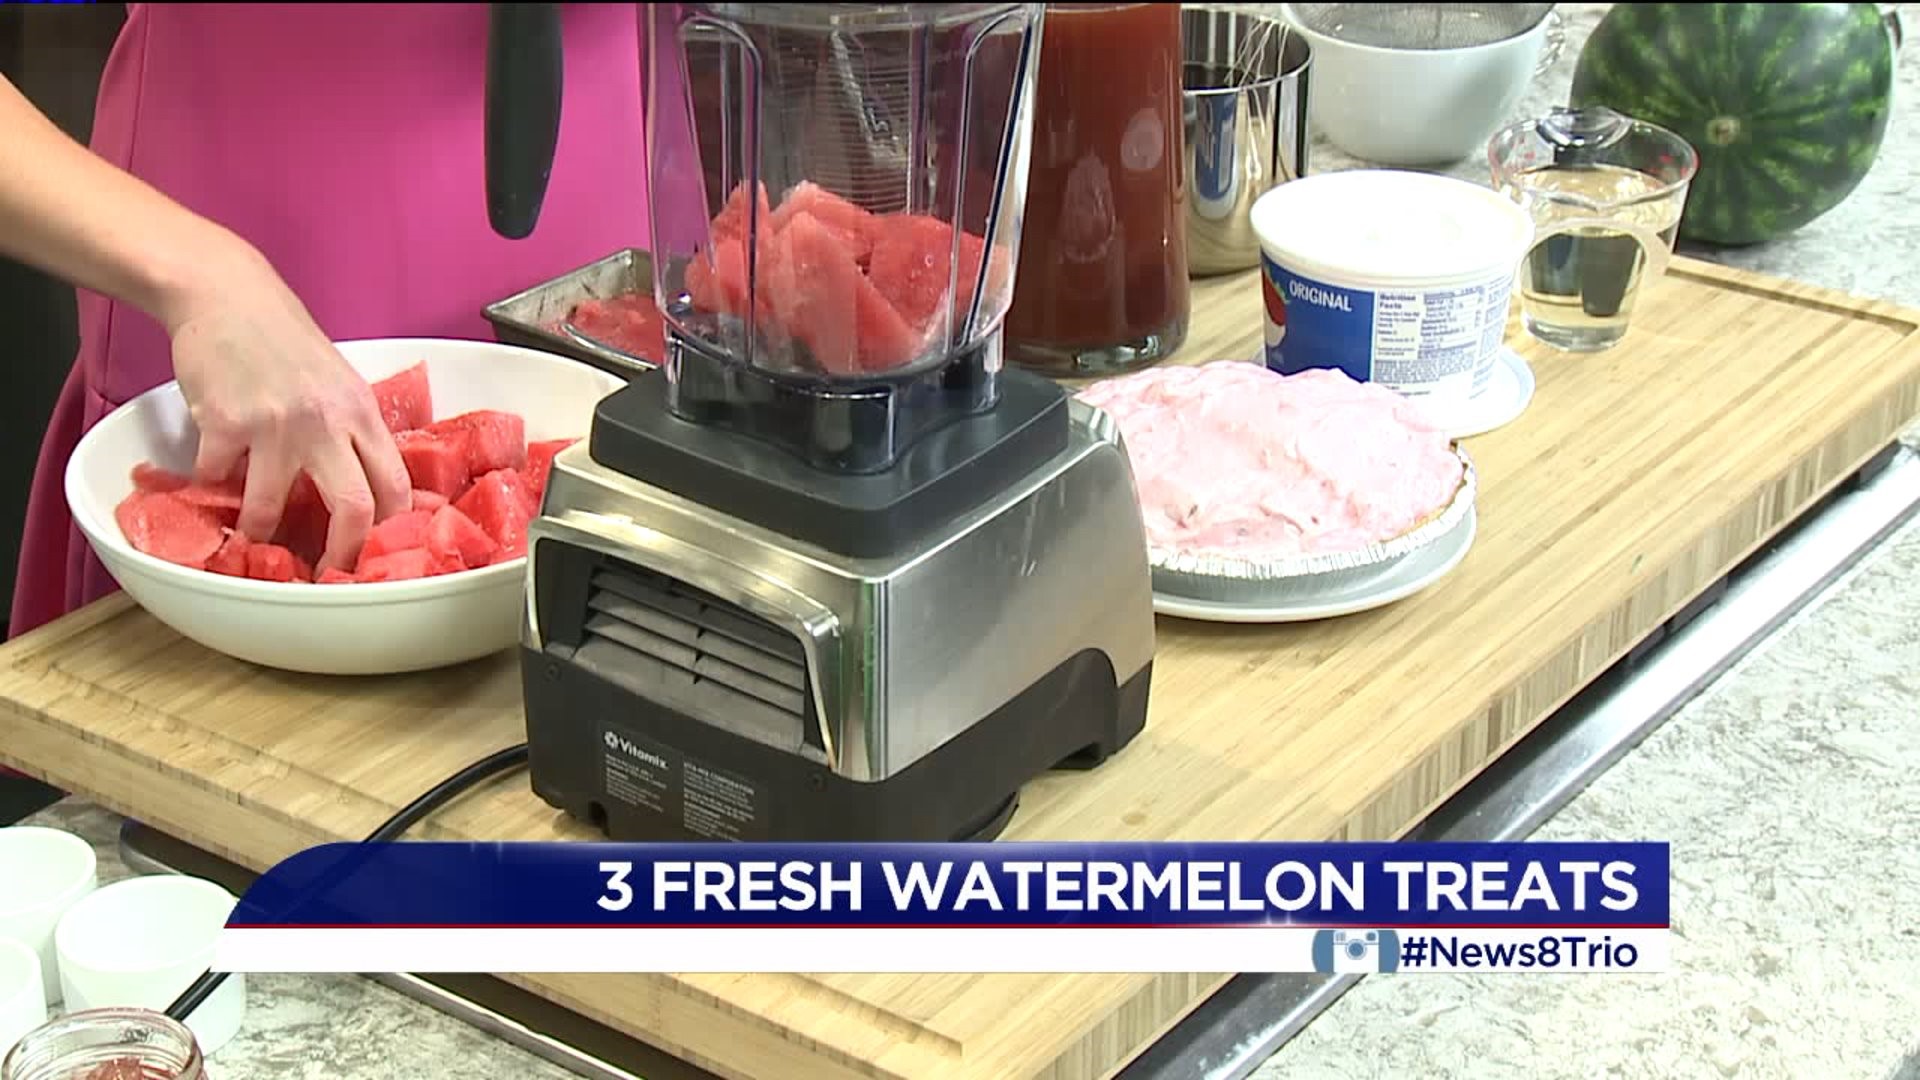 NEWS 8 TRIO Watermelon treats